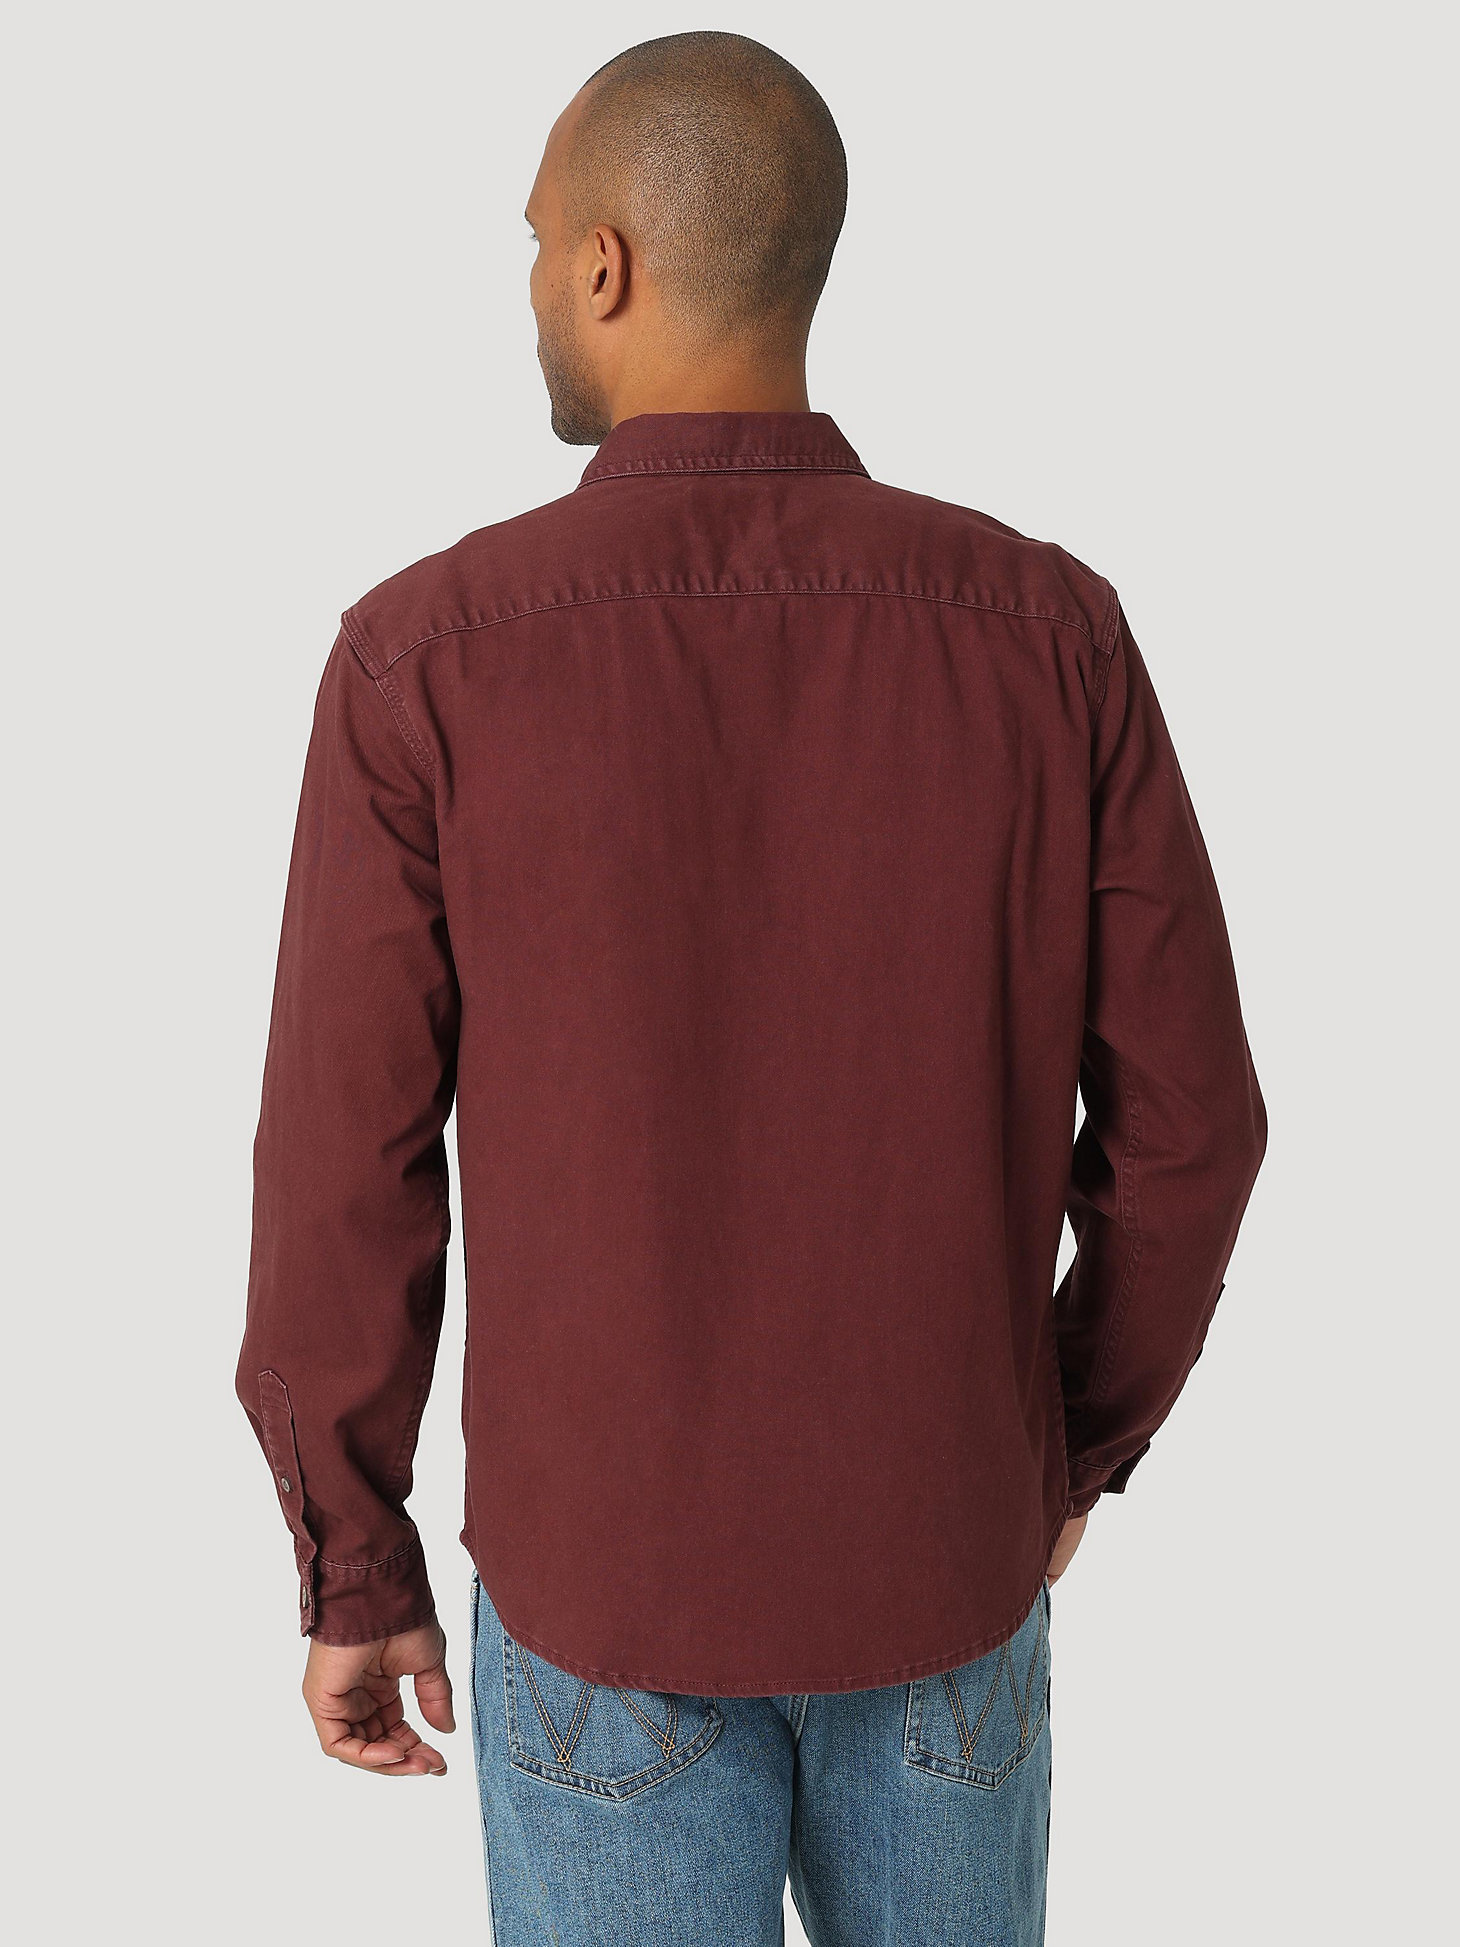 Men's Wrangler® Epic Soft™ Stretch Twill Shirt in Decadent Chocolate alternative view 1